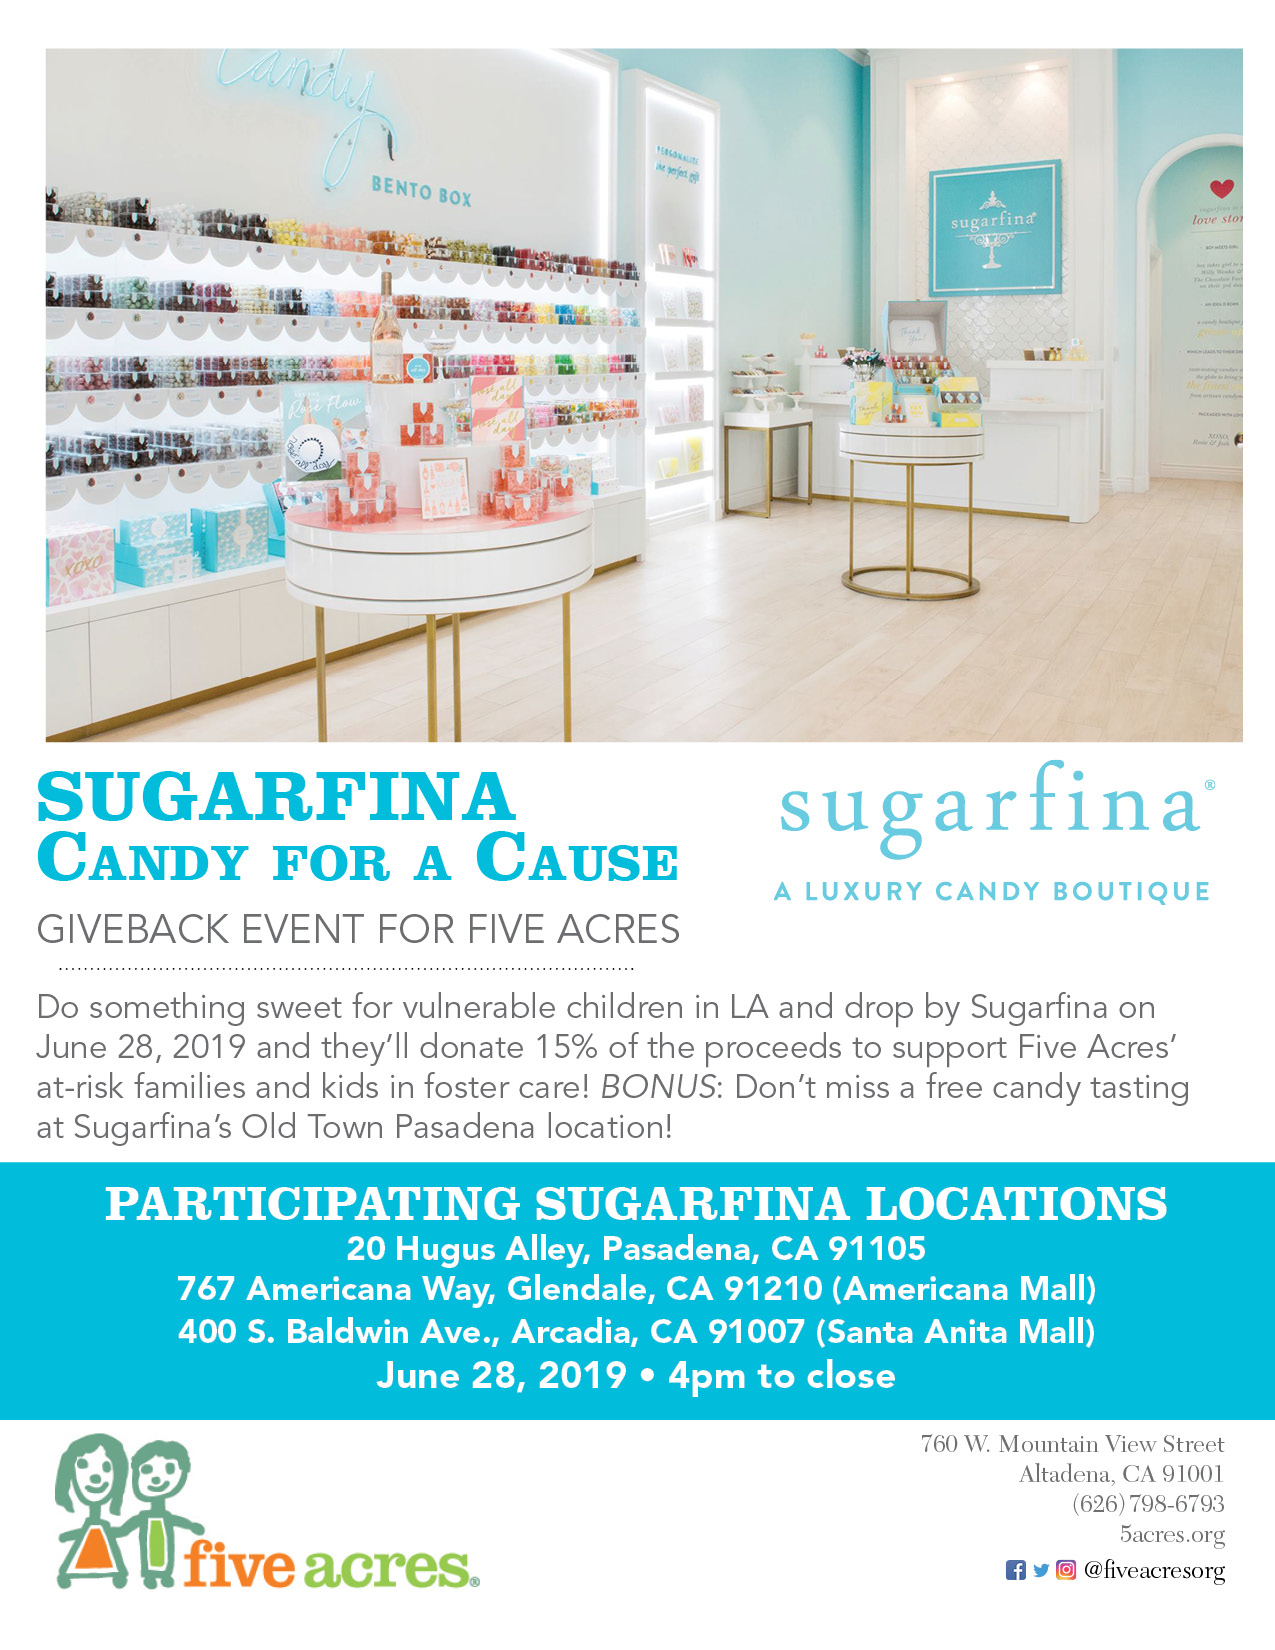 Sugarfina Giveback for Five Acres 2019